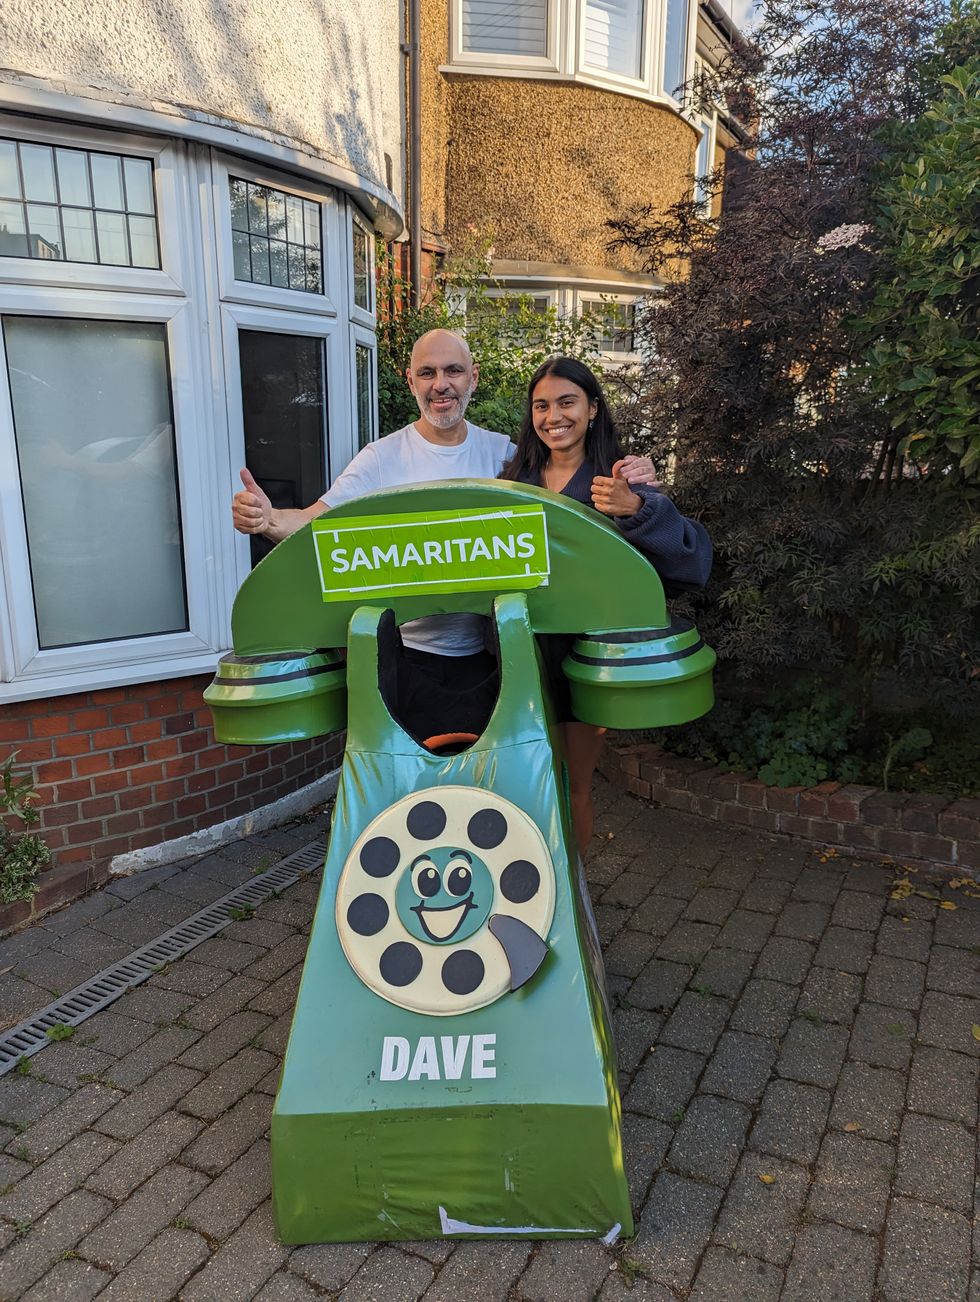 Telephone man answers call to lead Samaritans’ London Marathon team